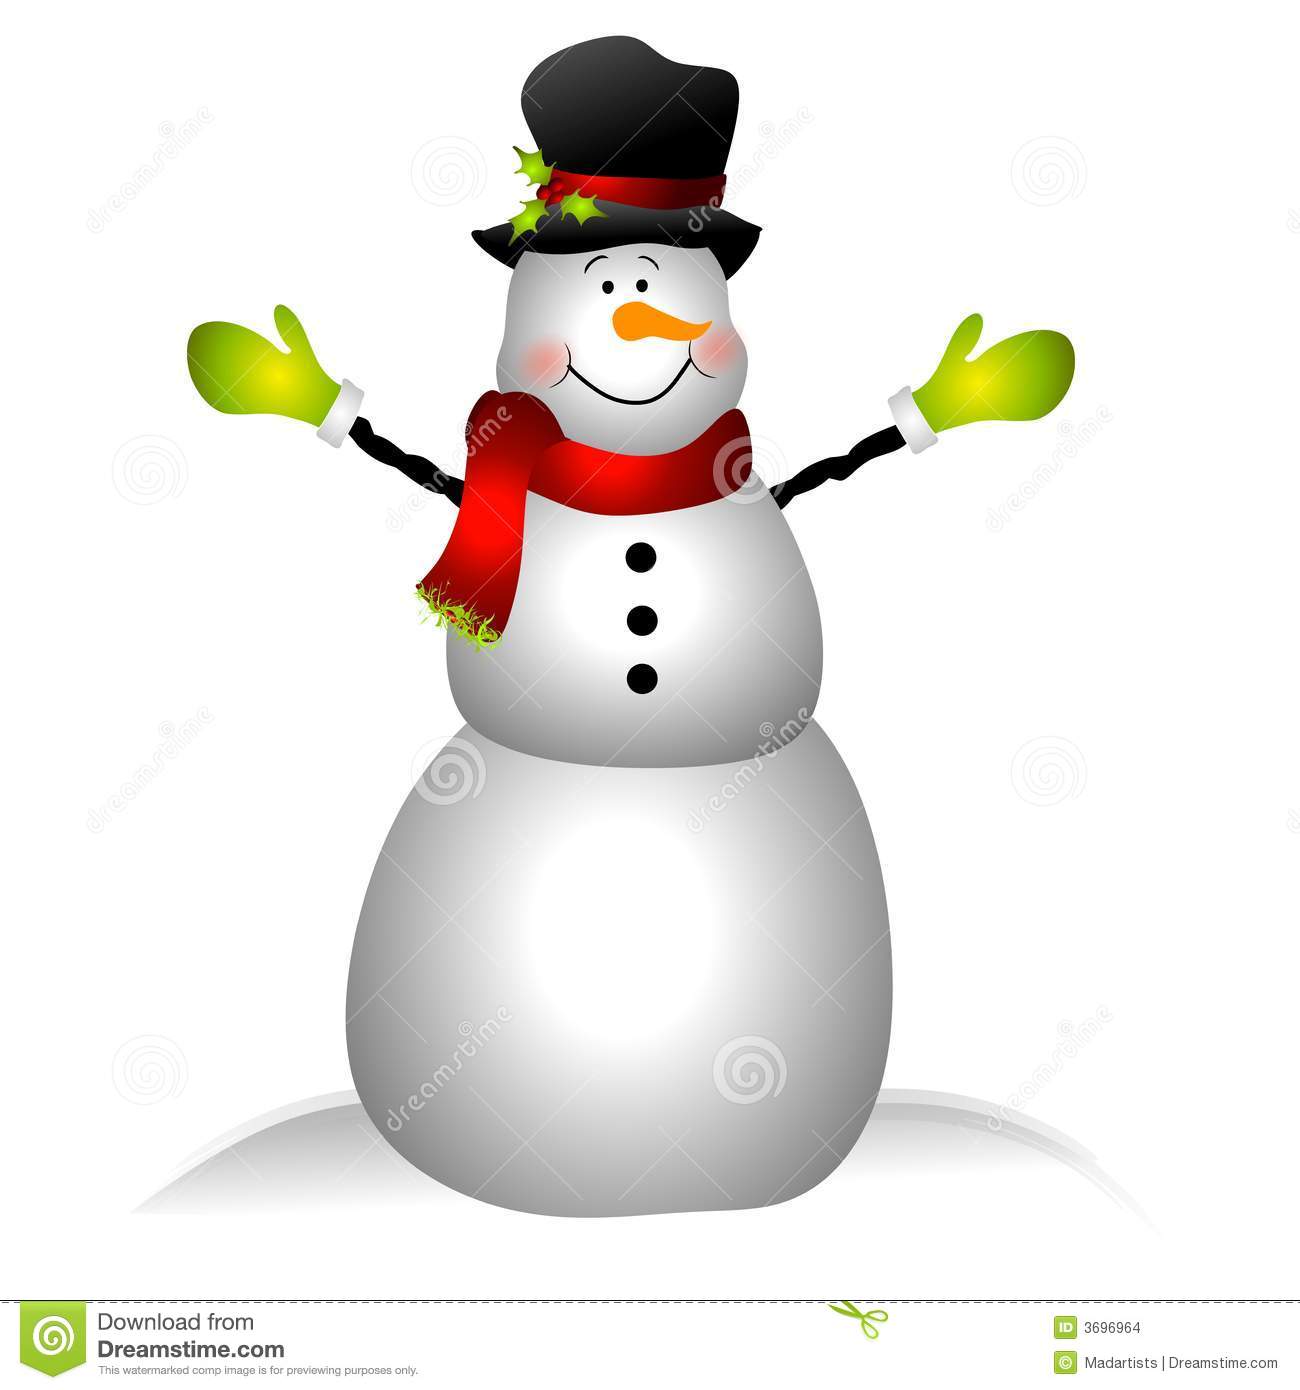 Snowman grade onederful free 